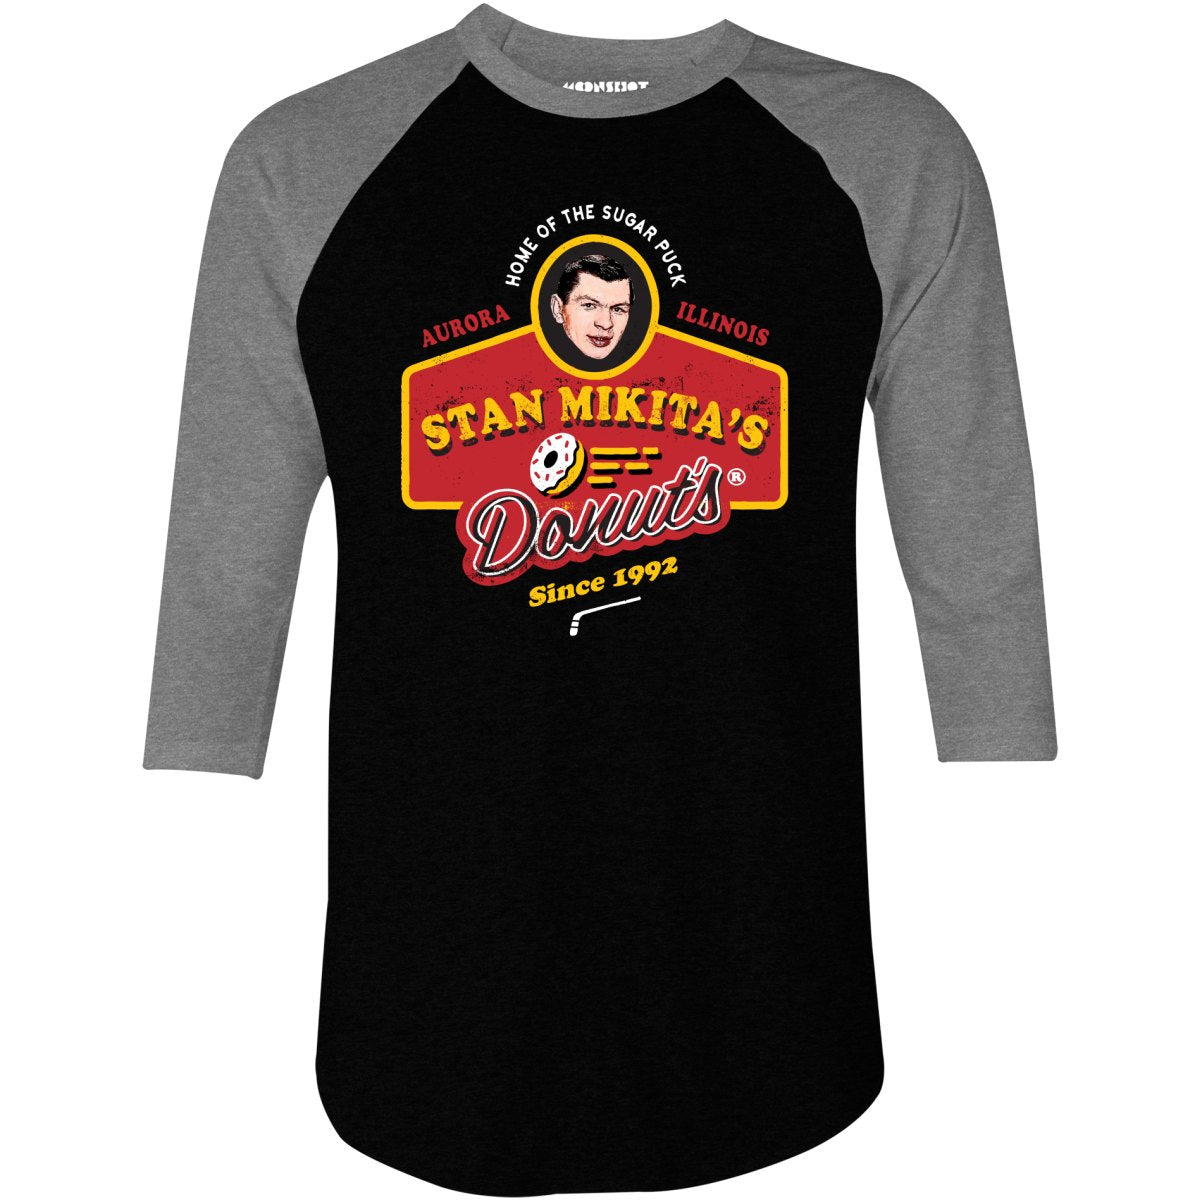 Stan Mikita's Donuts - 3/4 Sleeve Raglan T-Shirt